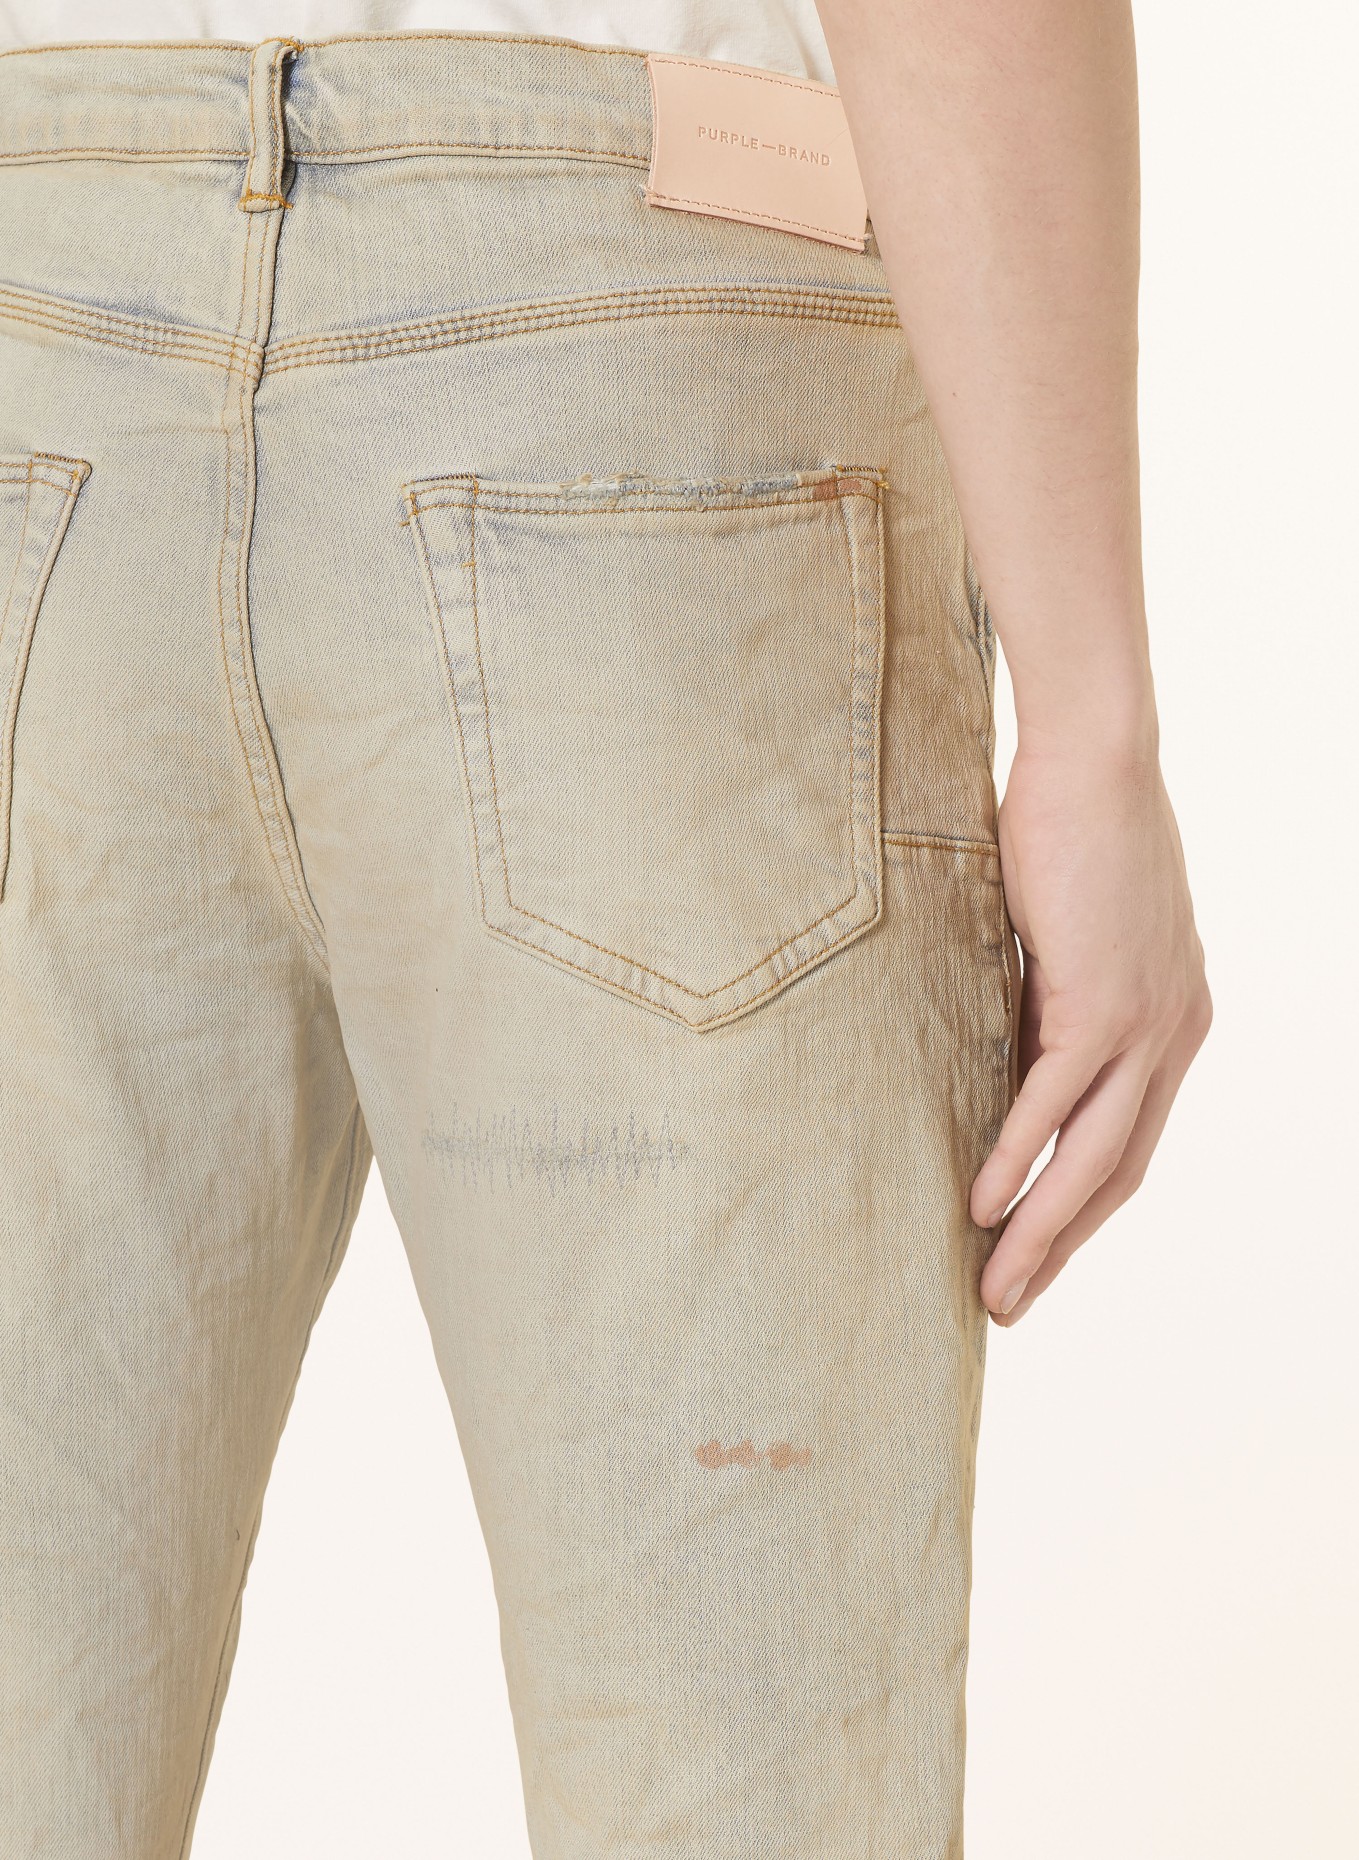 PURPLE BRAND Jeans P001 Skinny Fit, Farbe: Superlight (Bild 6)